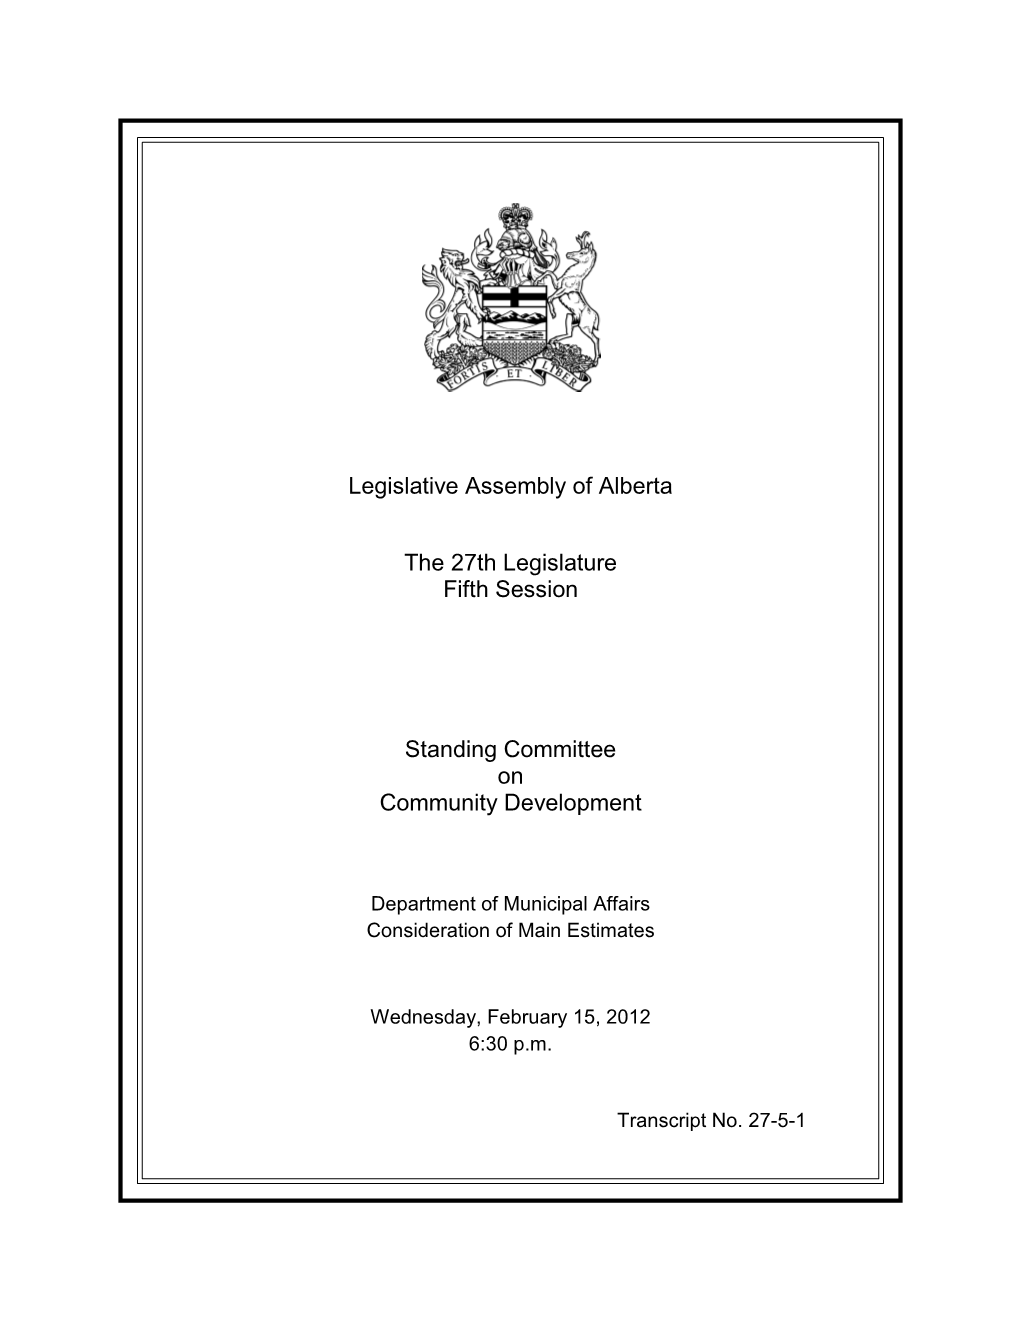 Legislative Assembly of Alberta the 27Th Legislature Fifth Session Standing Committee on Community Development